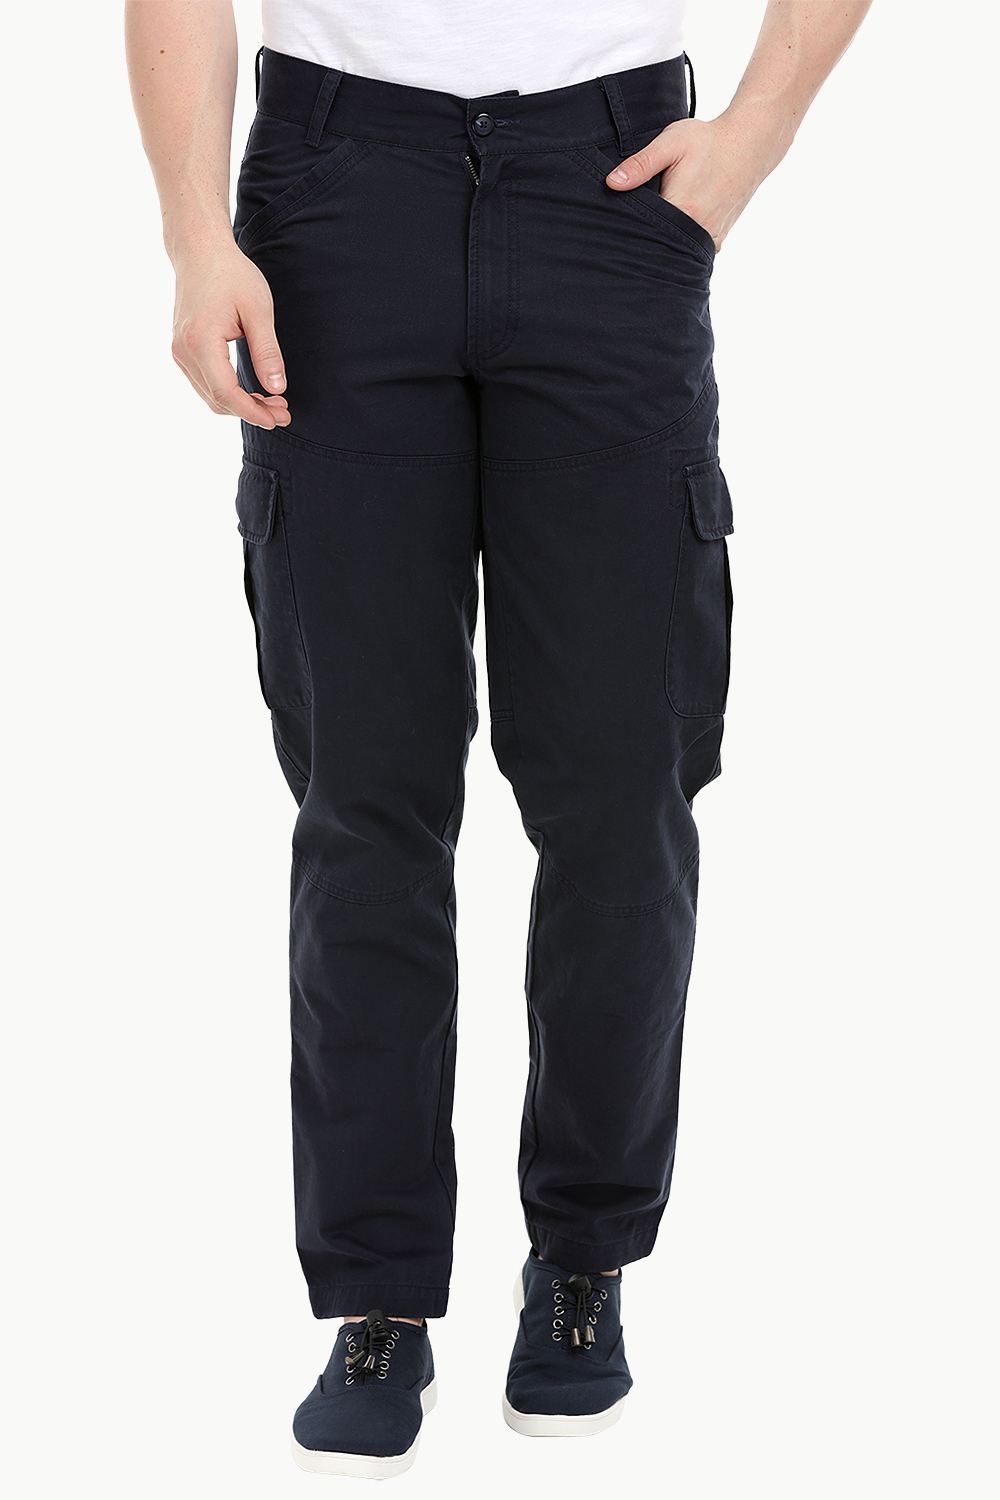 Tactical BDU Pants - Poly Cotton Uniform 6 Pocket Cargo | eBay